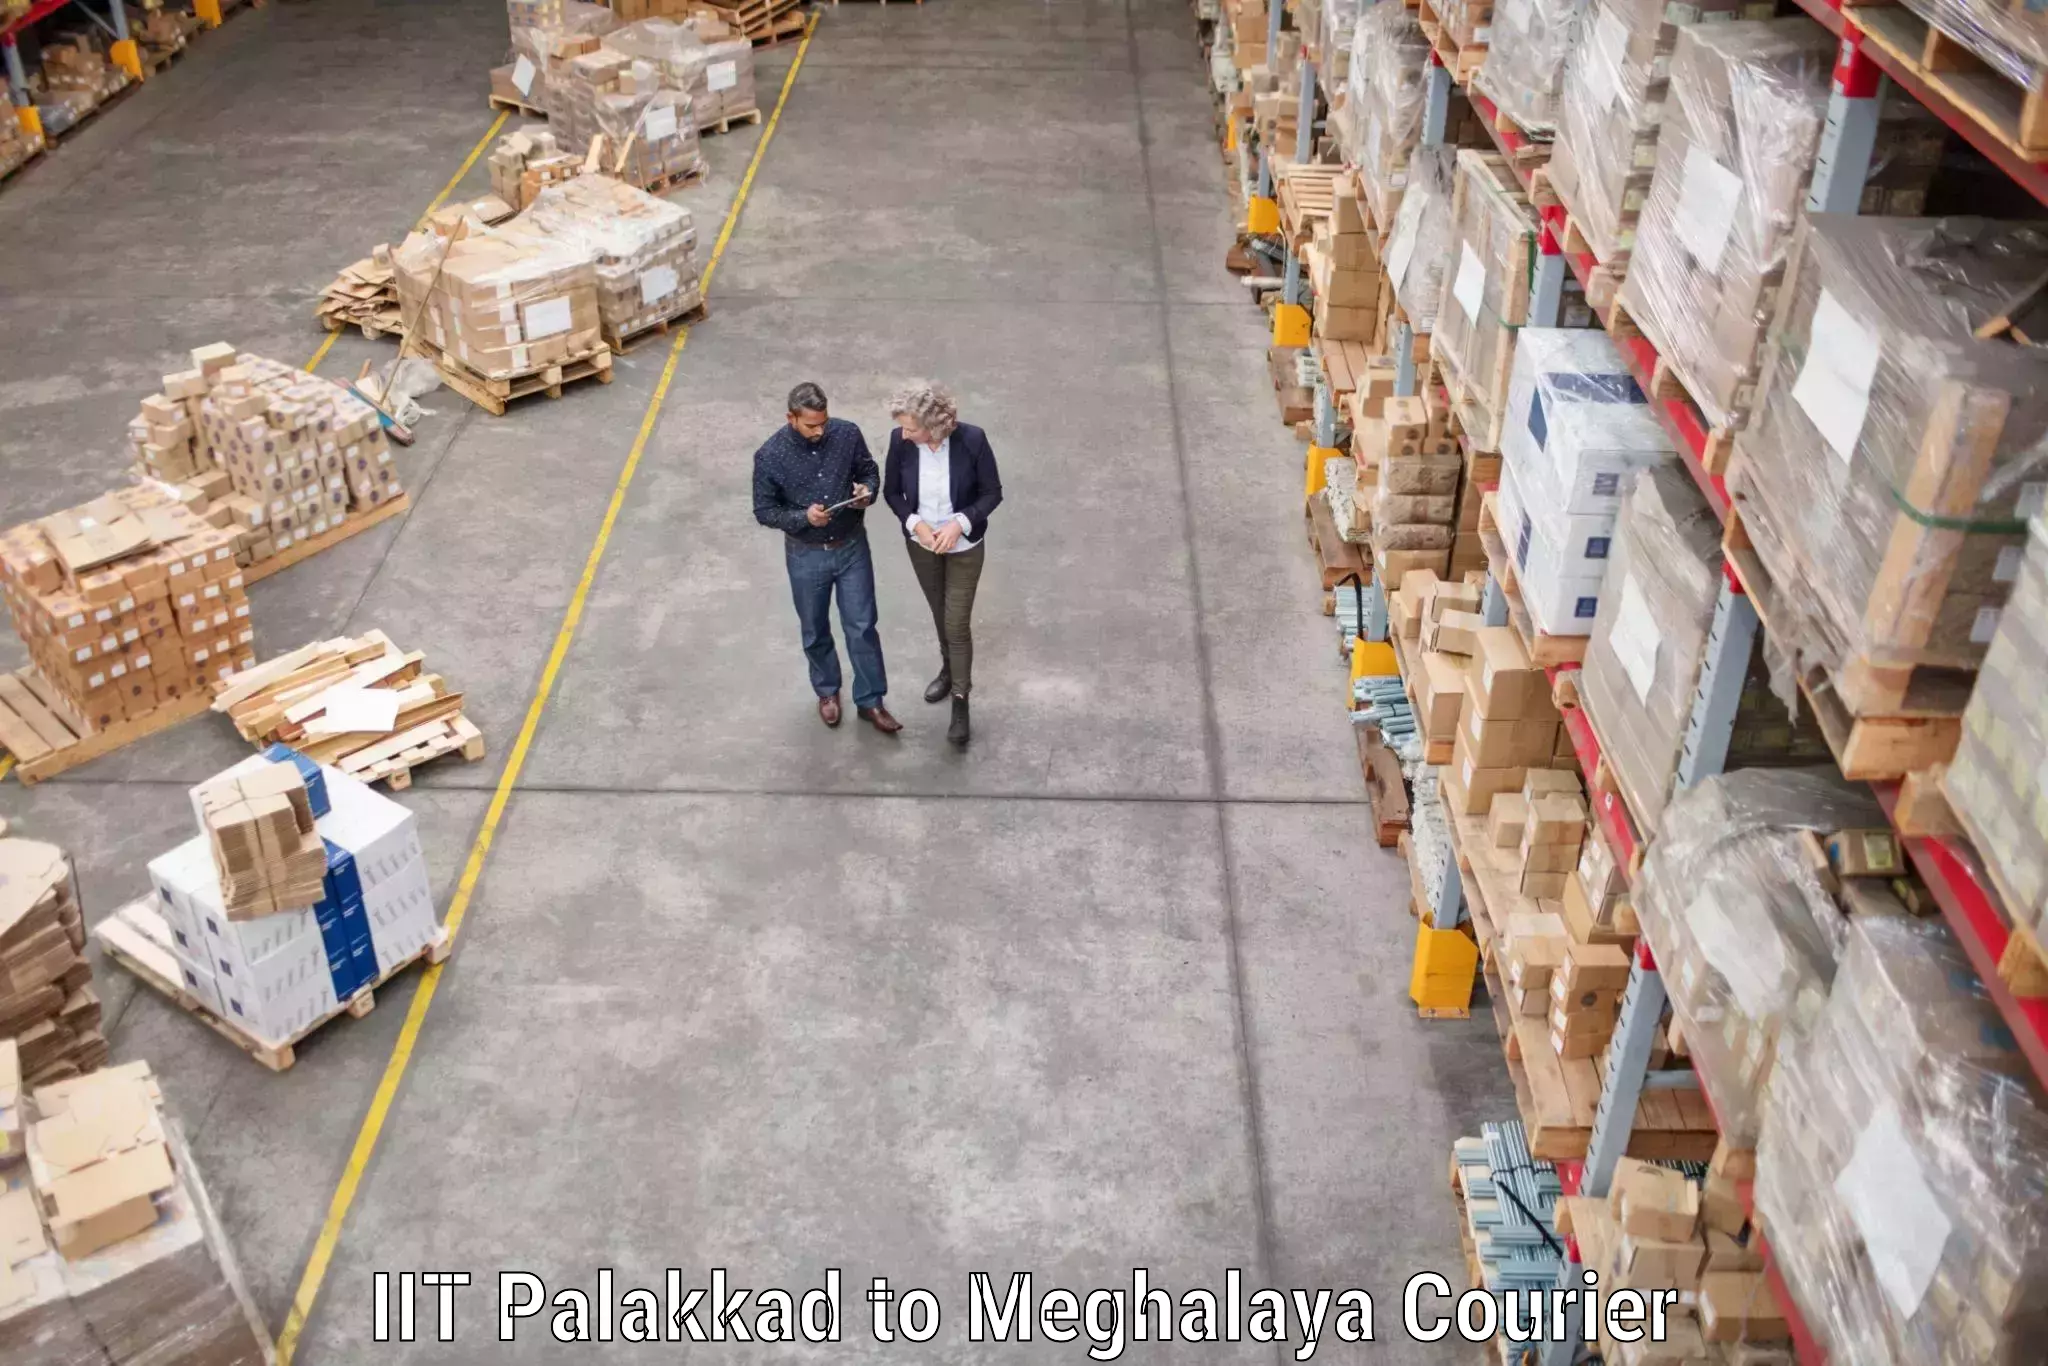 Trusted moving company IIT Palakkad to Meghalaya